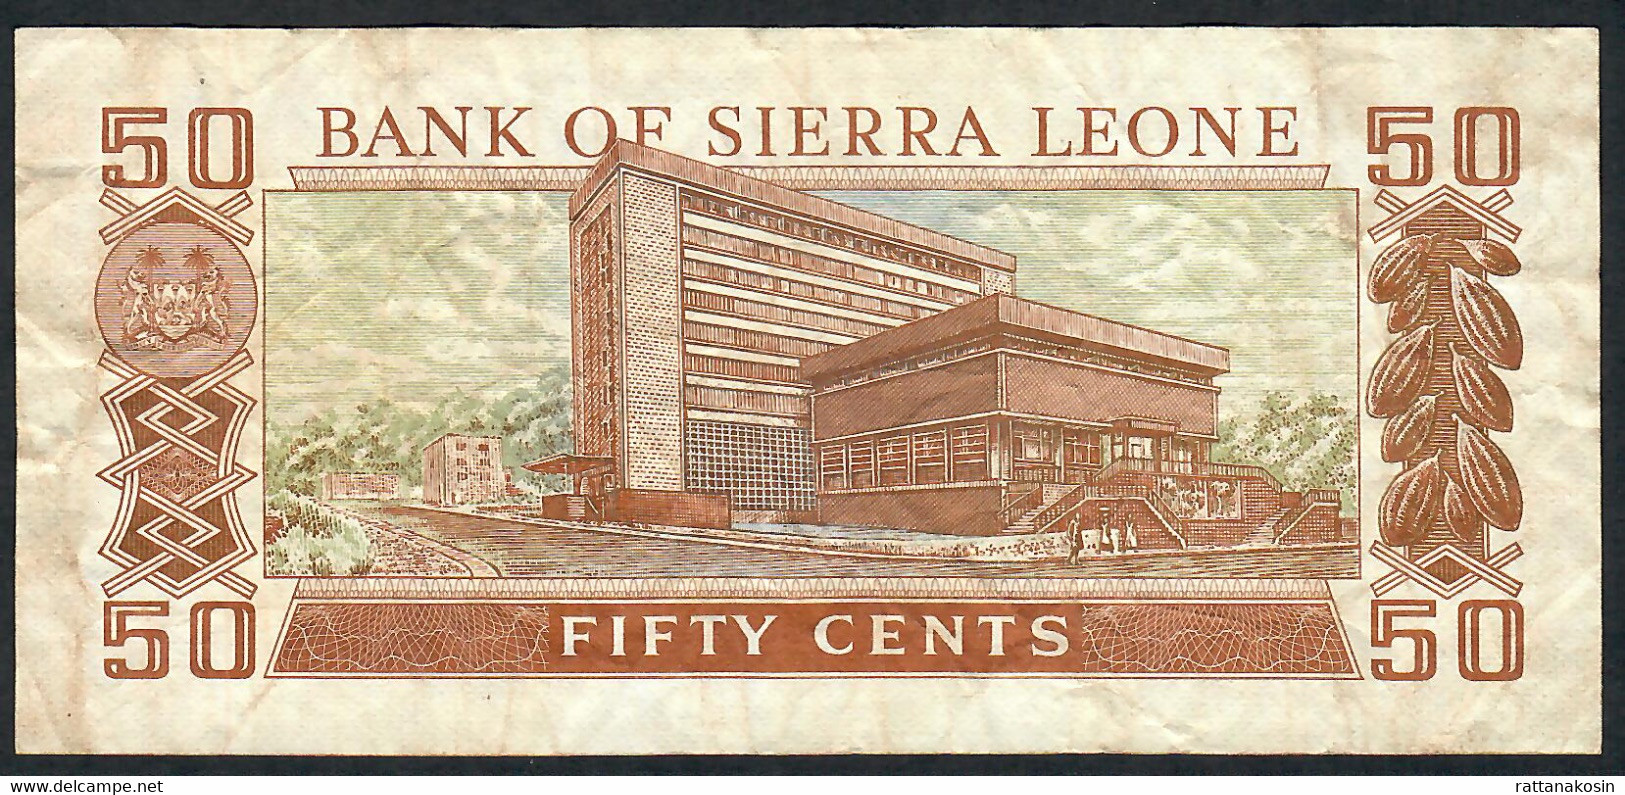 SIERRA LEONE P4a,b,c,d 50 CENTS 1972-1974-1979-1981 #D/1,D/5,D/8,D/10  4 BANKNOTES DIFFERENT SIGNATURES  F-VF NO p.h. !